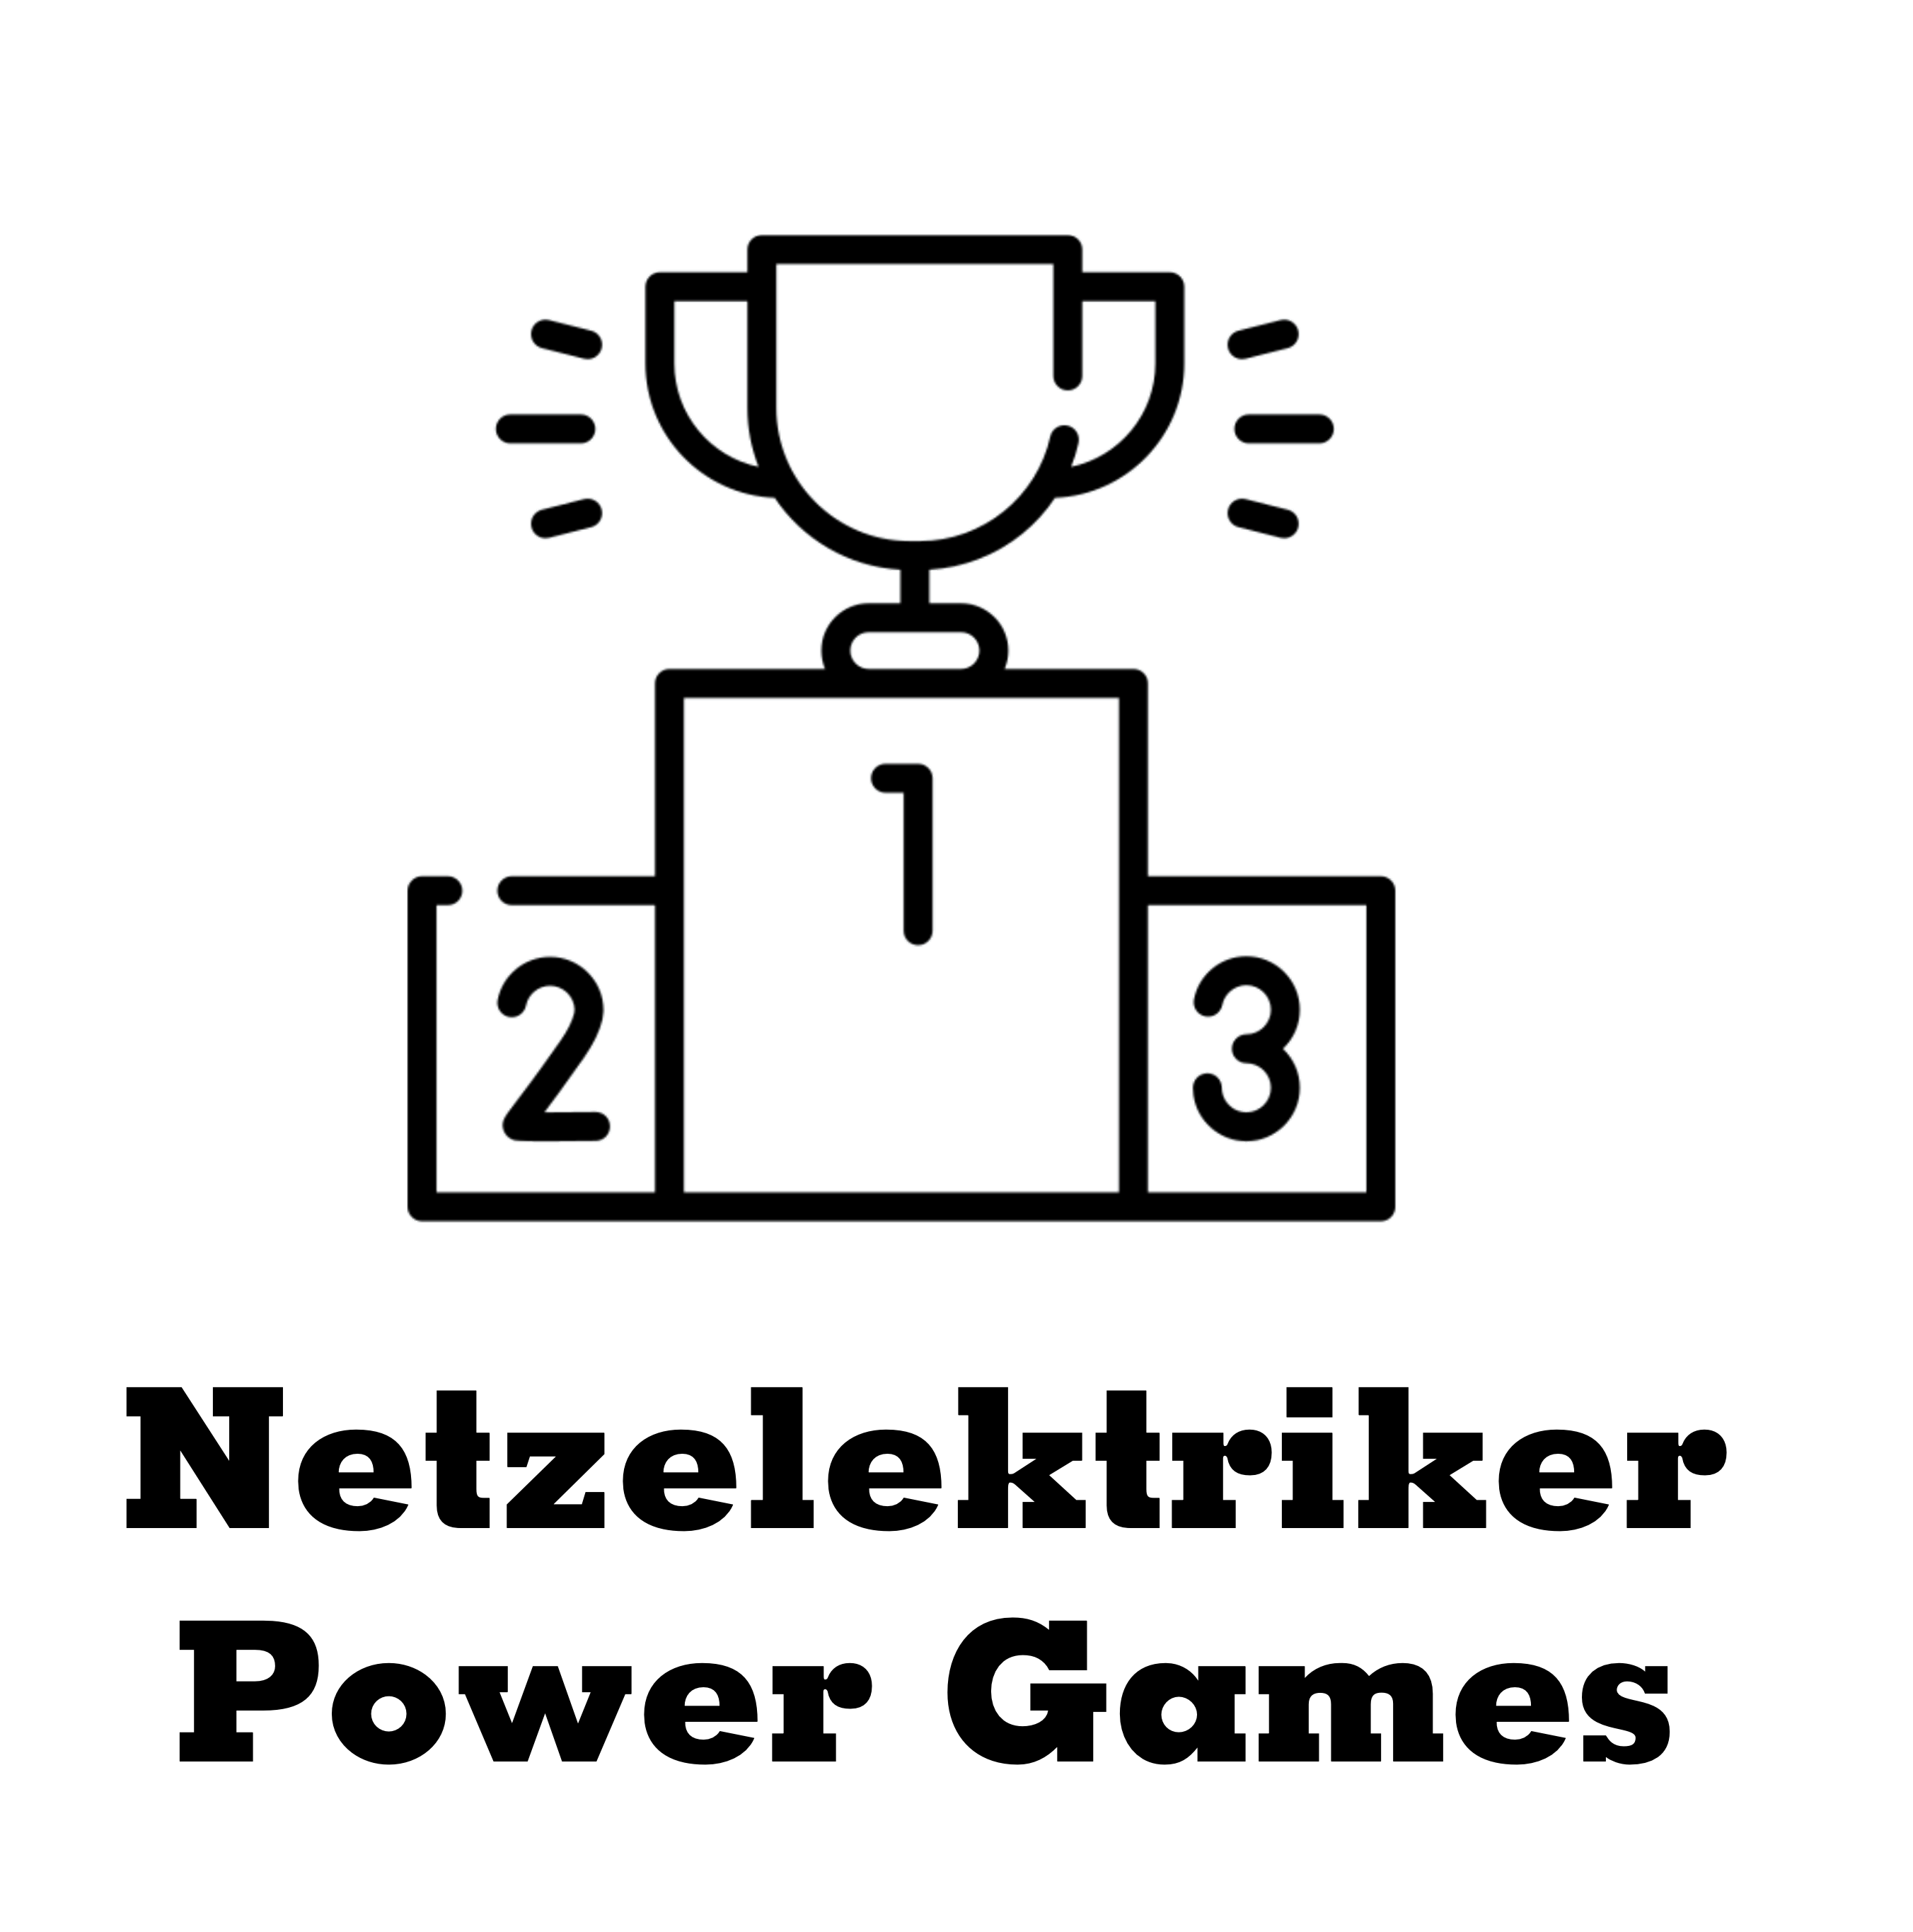 Netzelektriker Power Games